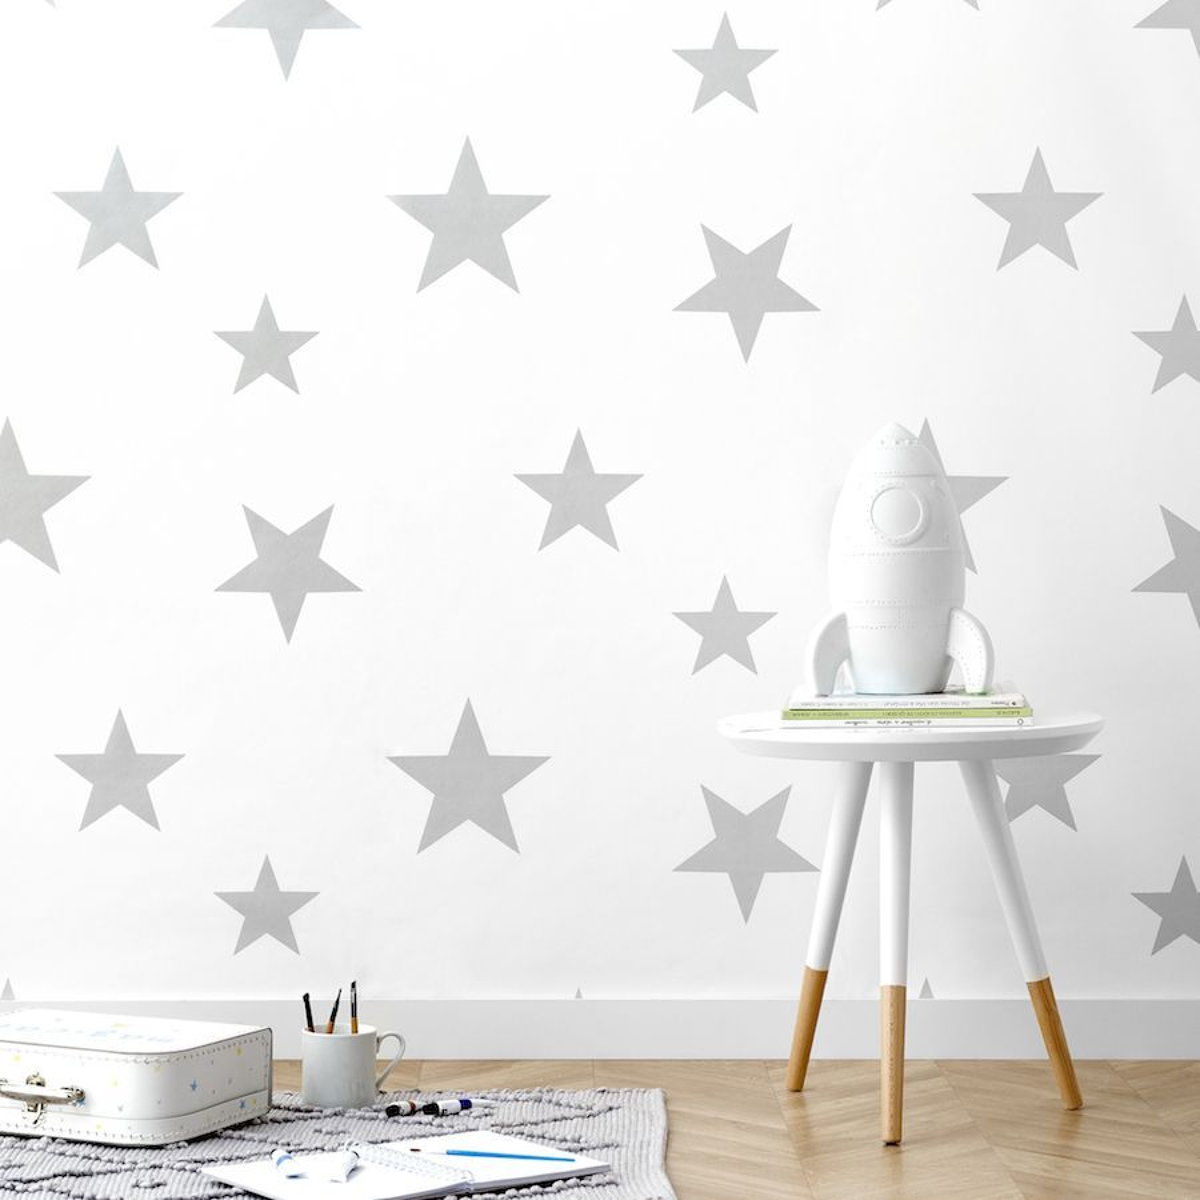 Stars wallpaper grigio/bianco